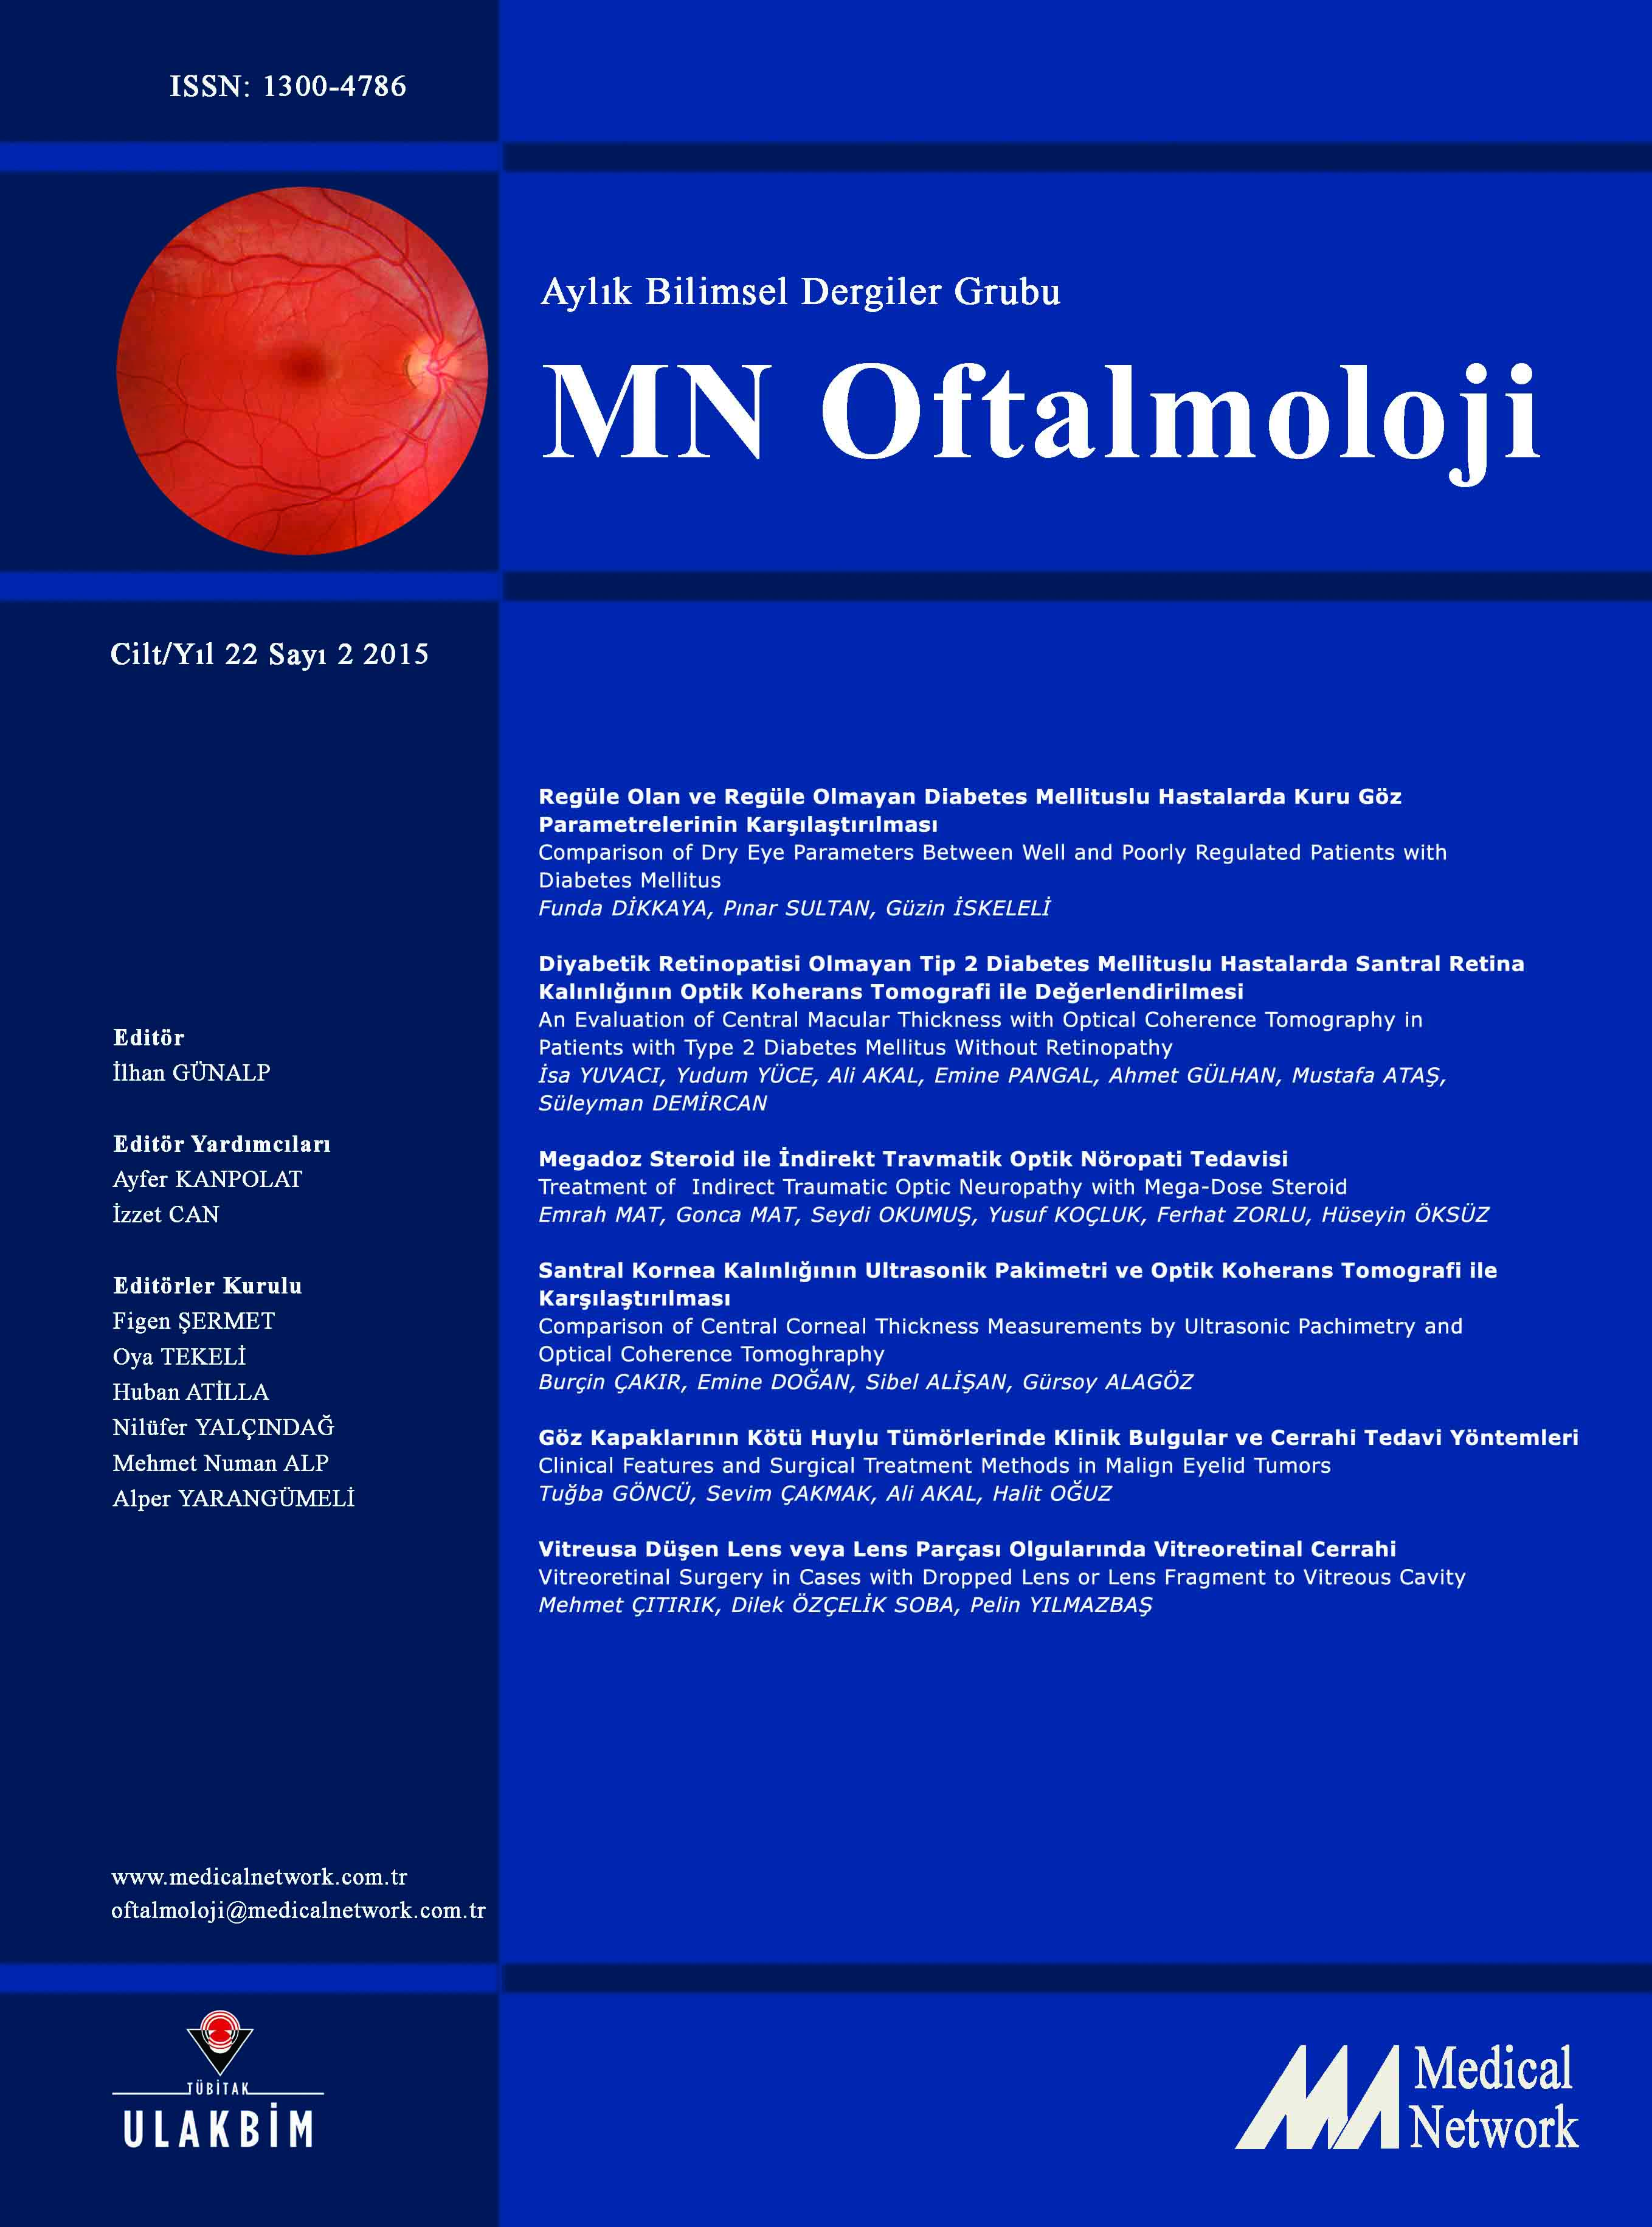 <p>MN Oftalmoloji Cilt: 22 Sayı: 2 2015 (MN Ophthalmology Volume: 22 No 2 2015)</p>